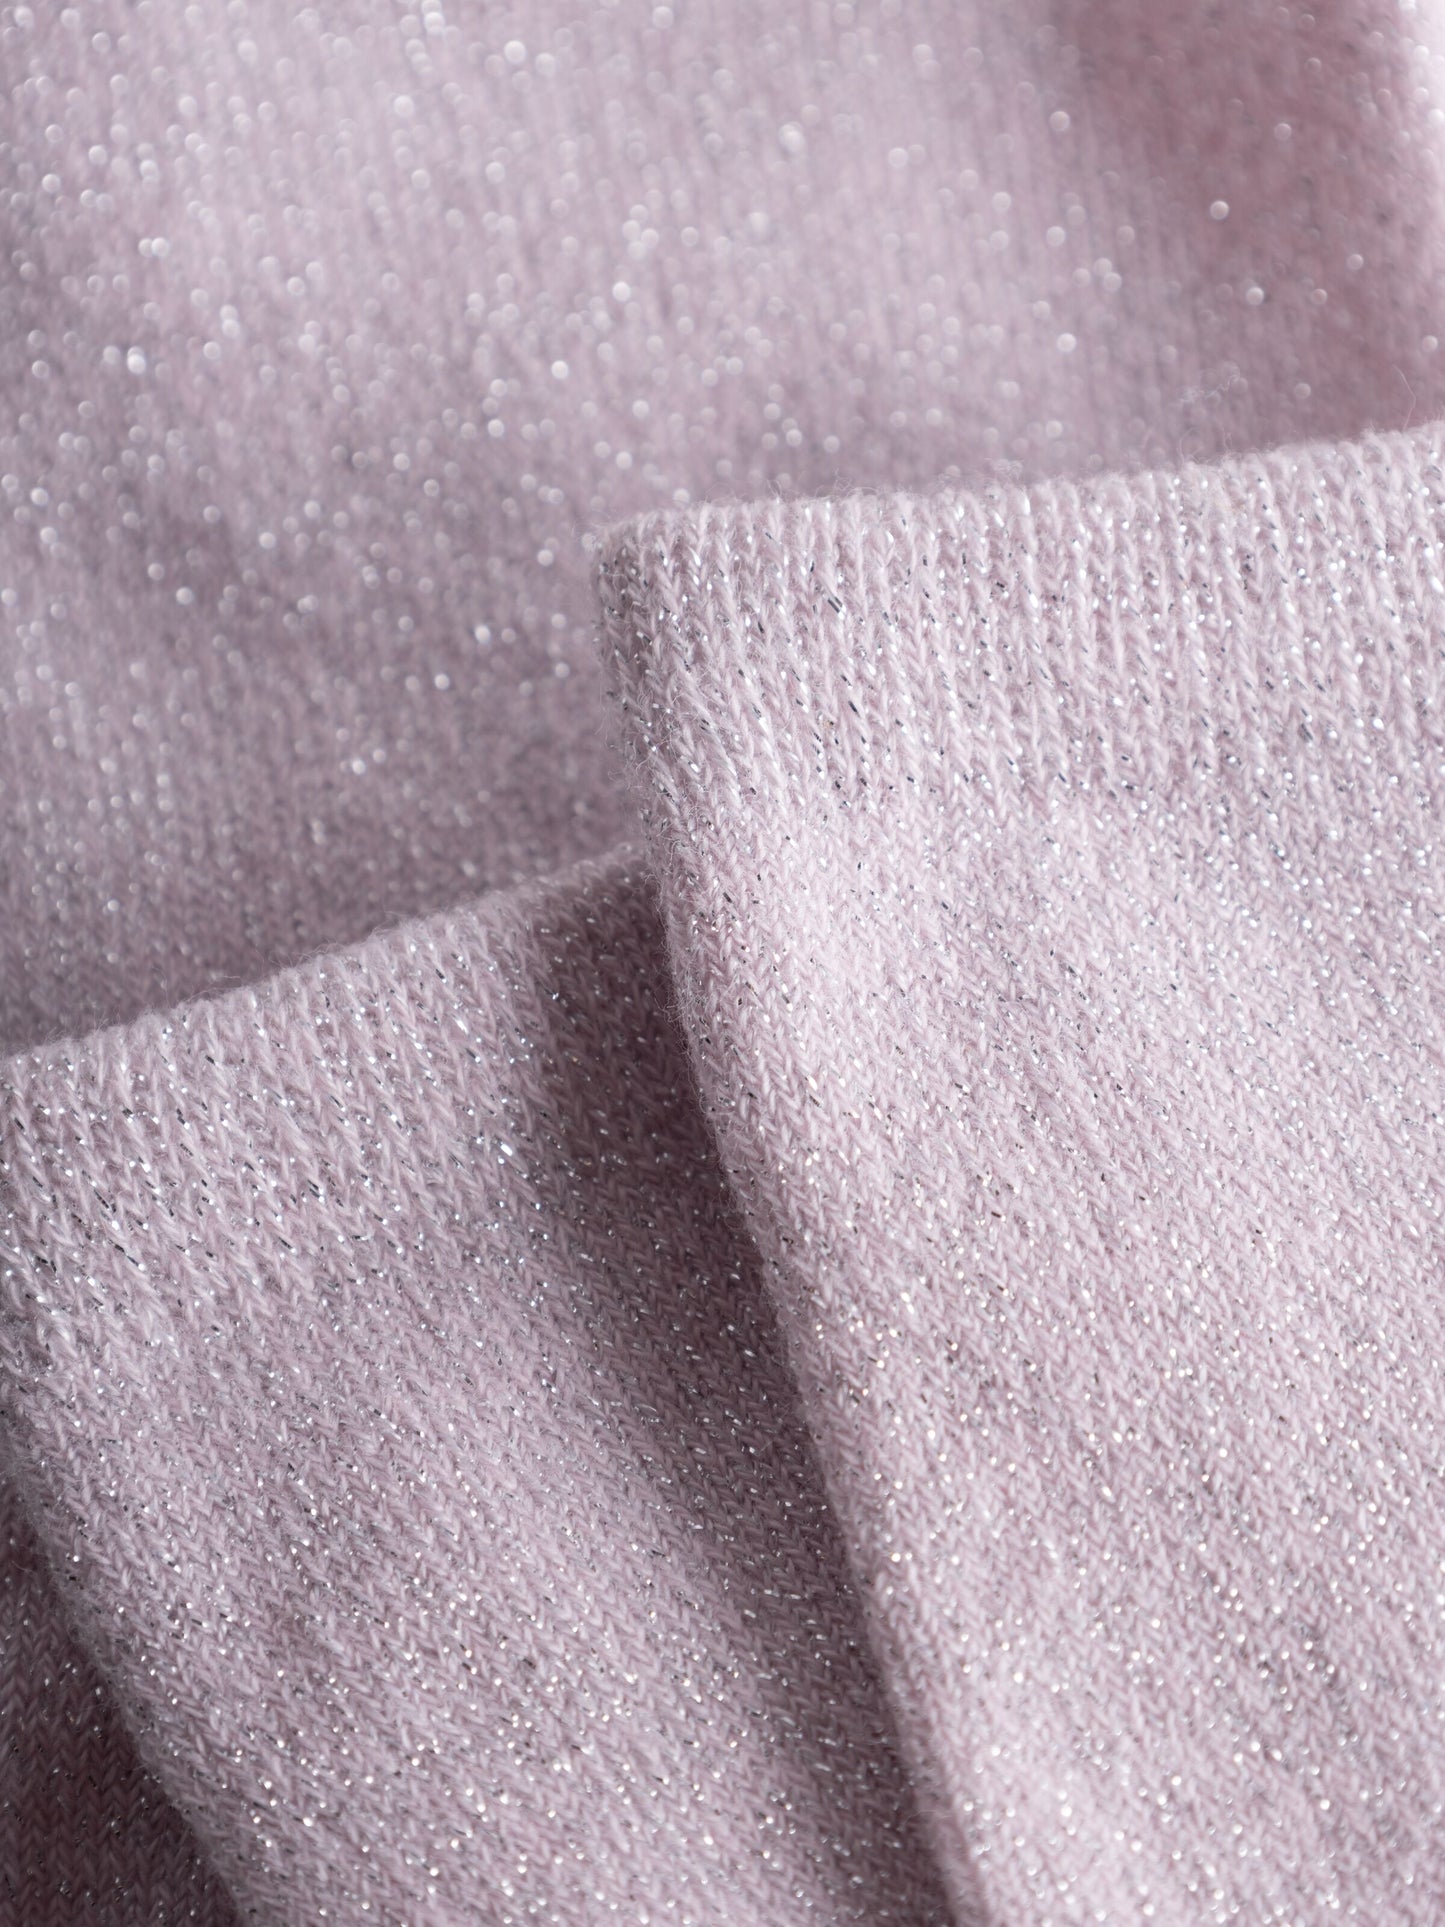 KCA - Glitter socks - Vegan Parfait Pink